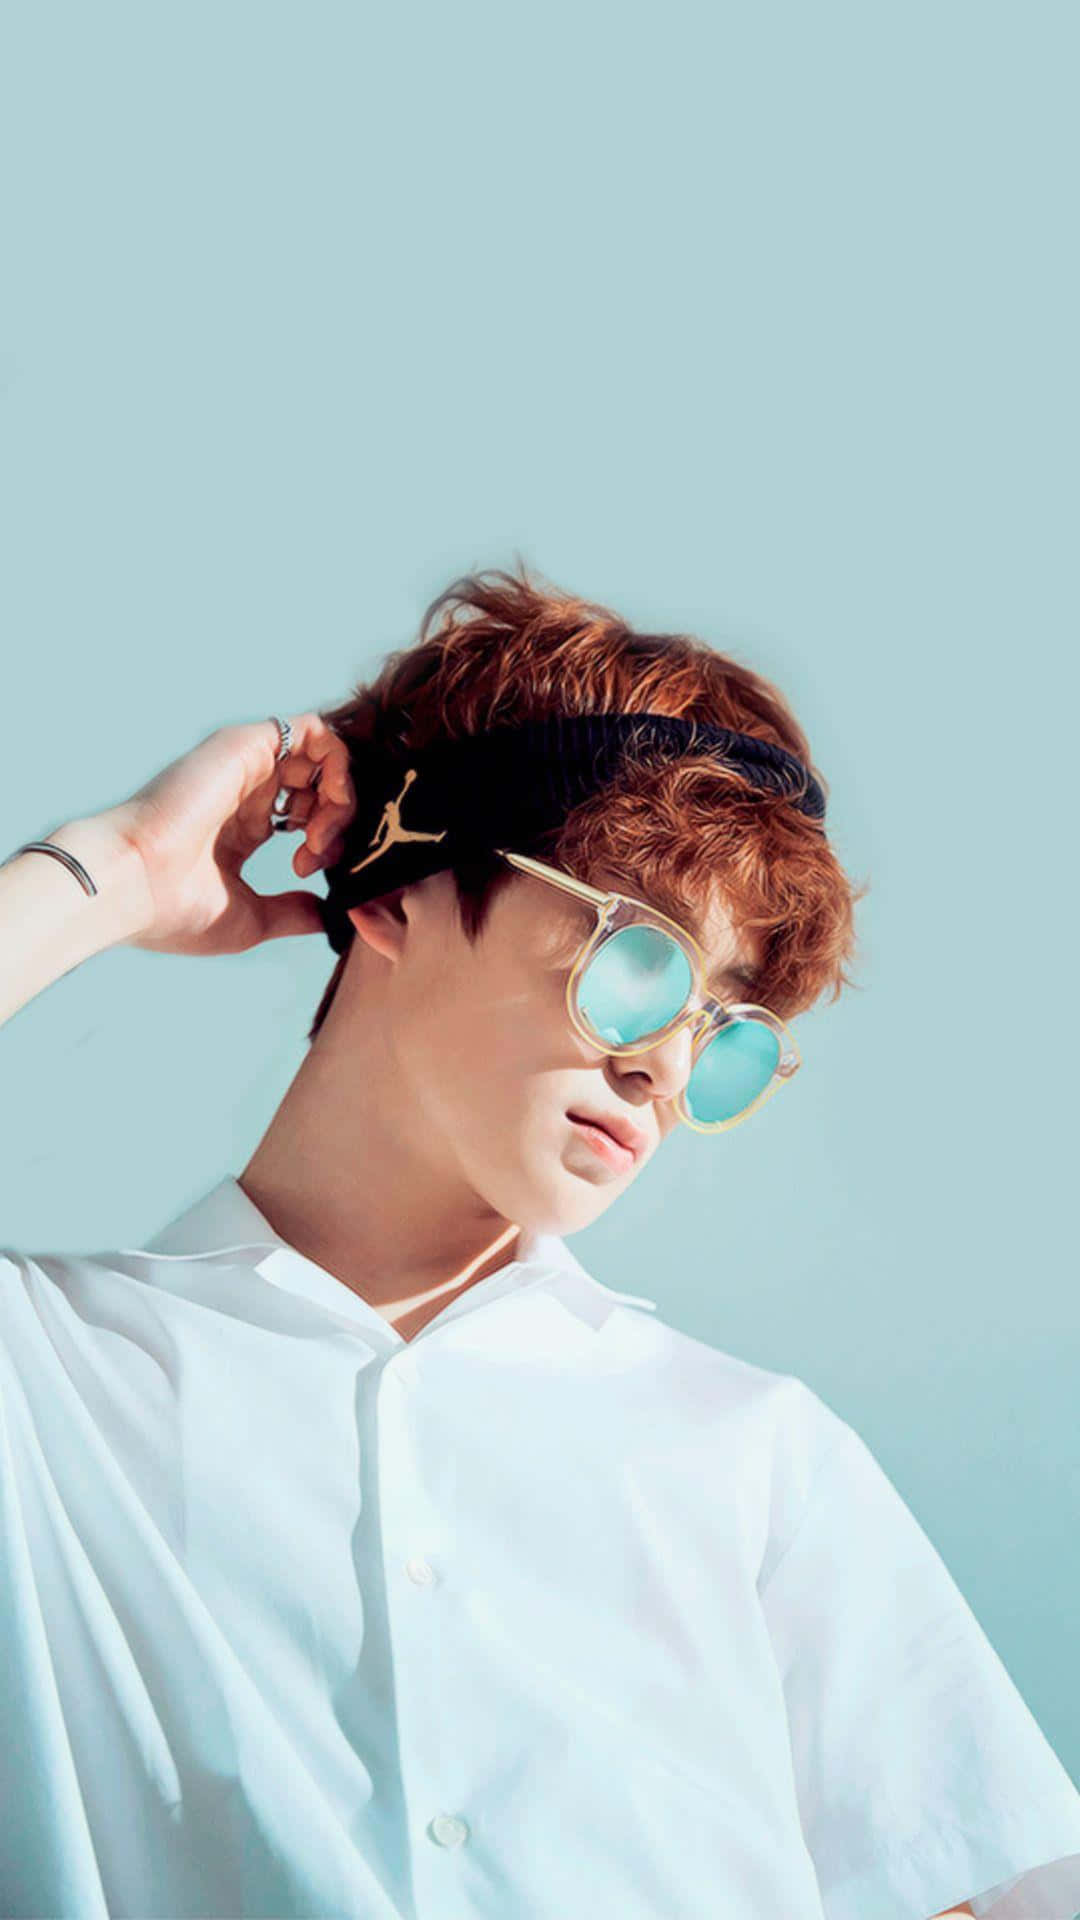 NCT Jaehyun In Sunglasses Fashion Portrait Wallpaper